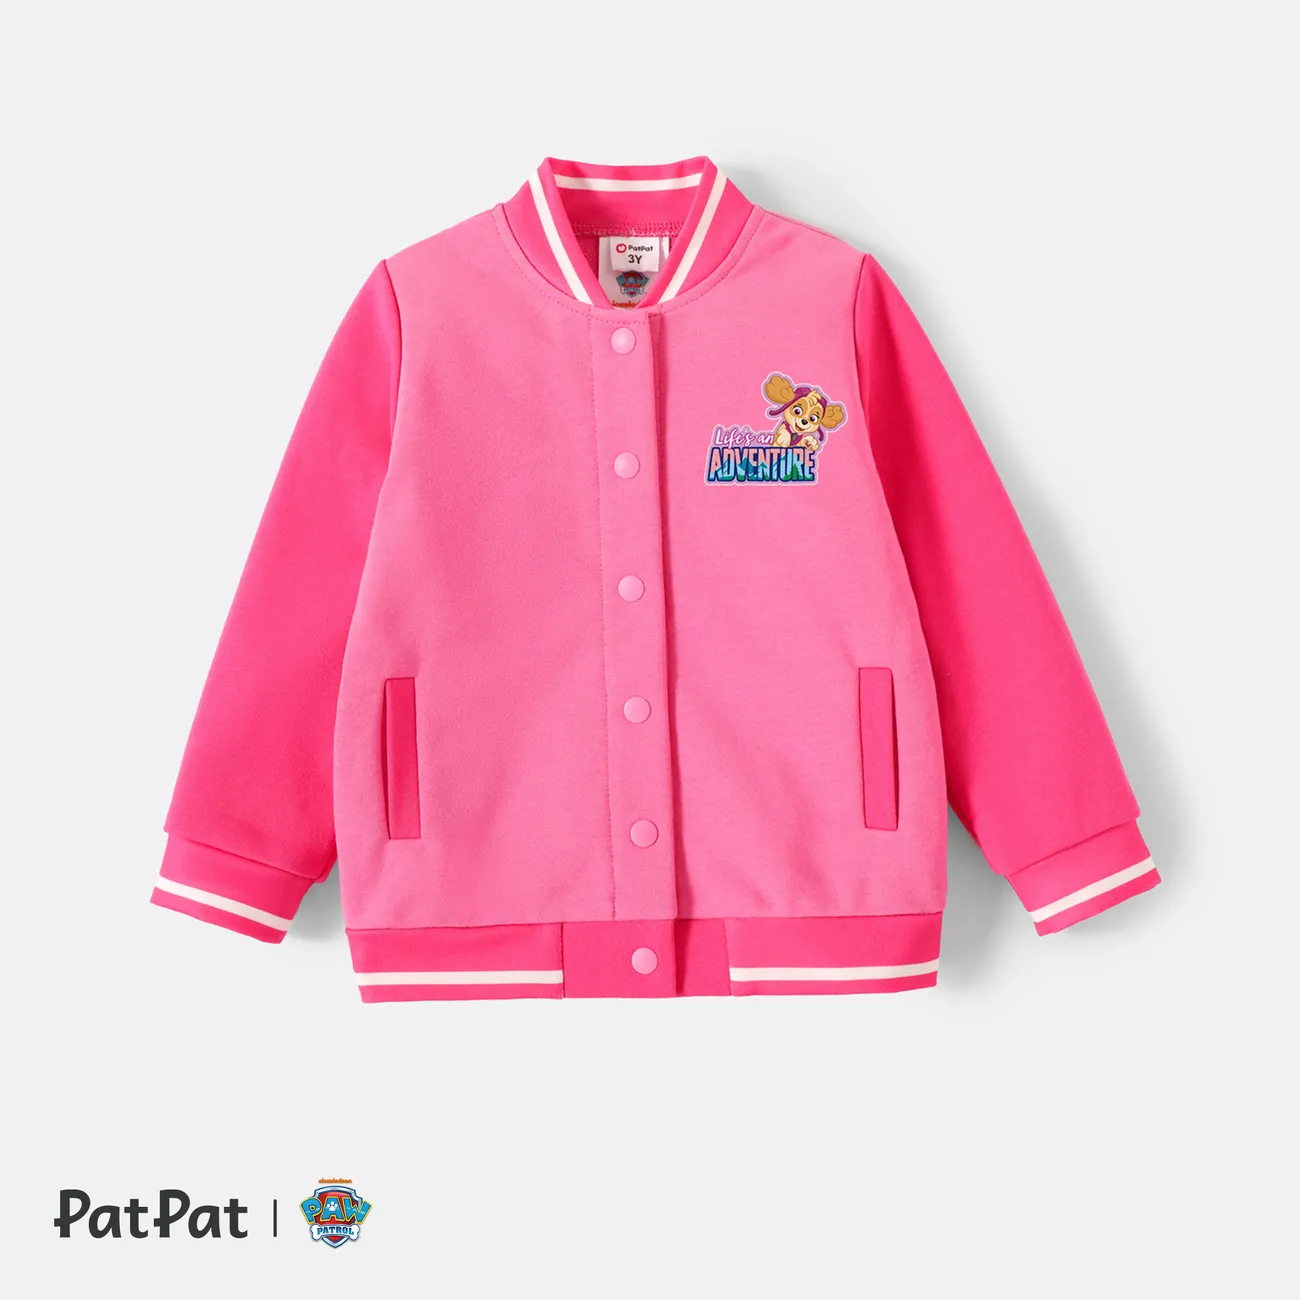 PAW Patrol Toddler Boy/Girl Front Buttons Cotton Jacket Pink big image 1